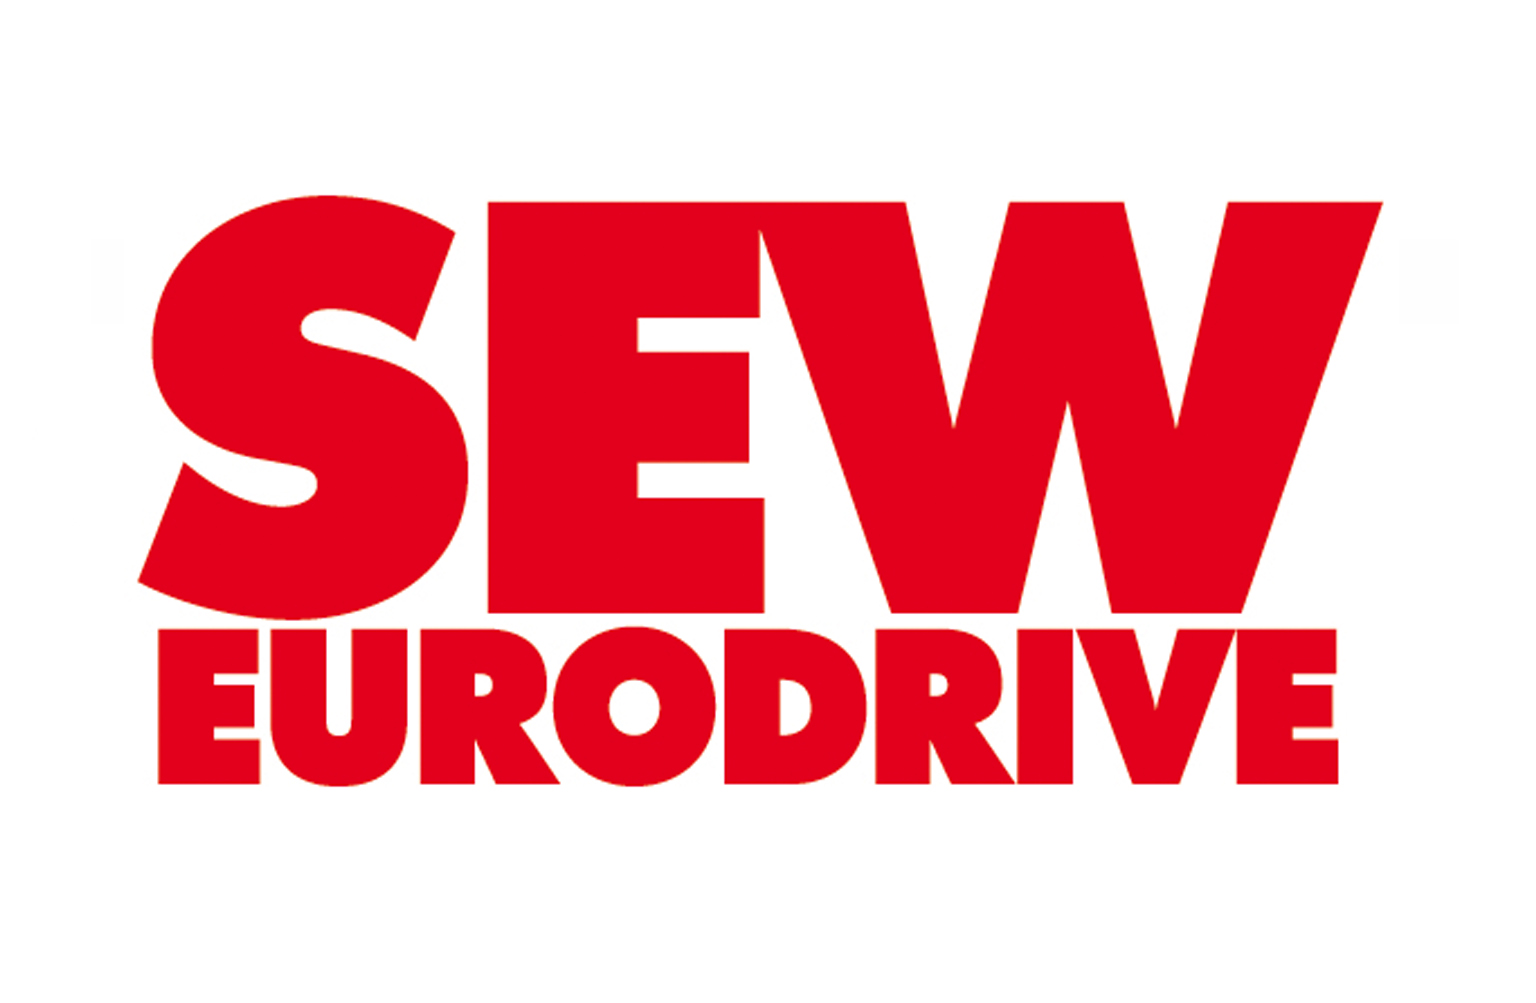 SEW Eurodrive logo